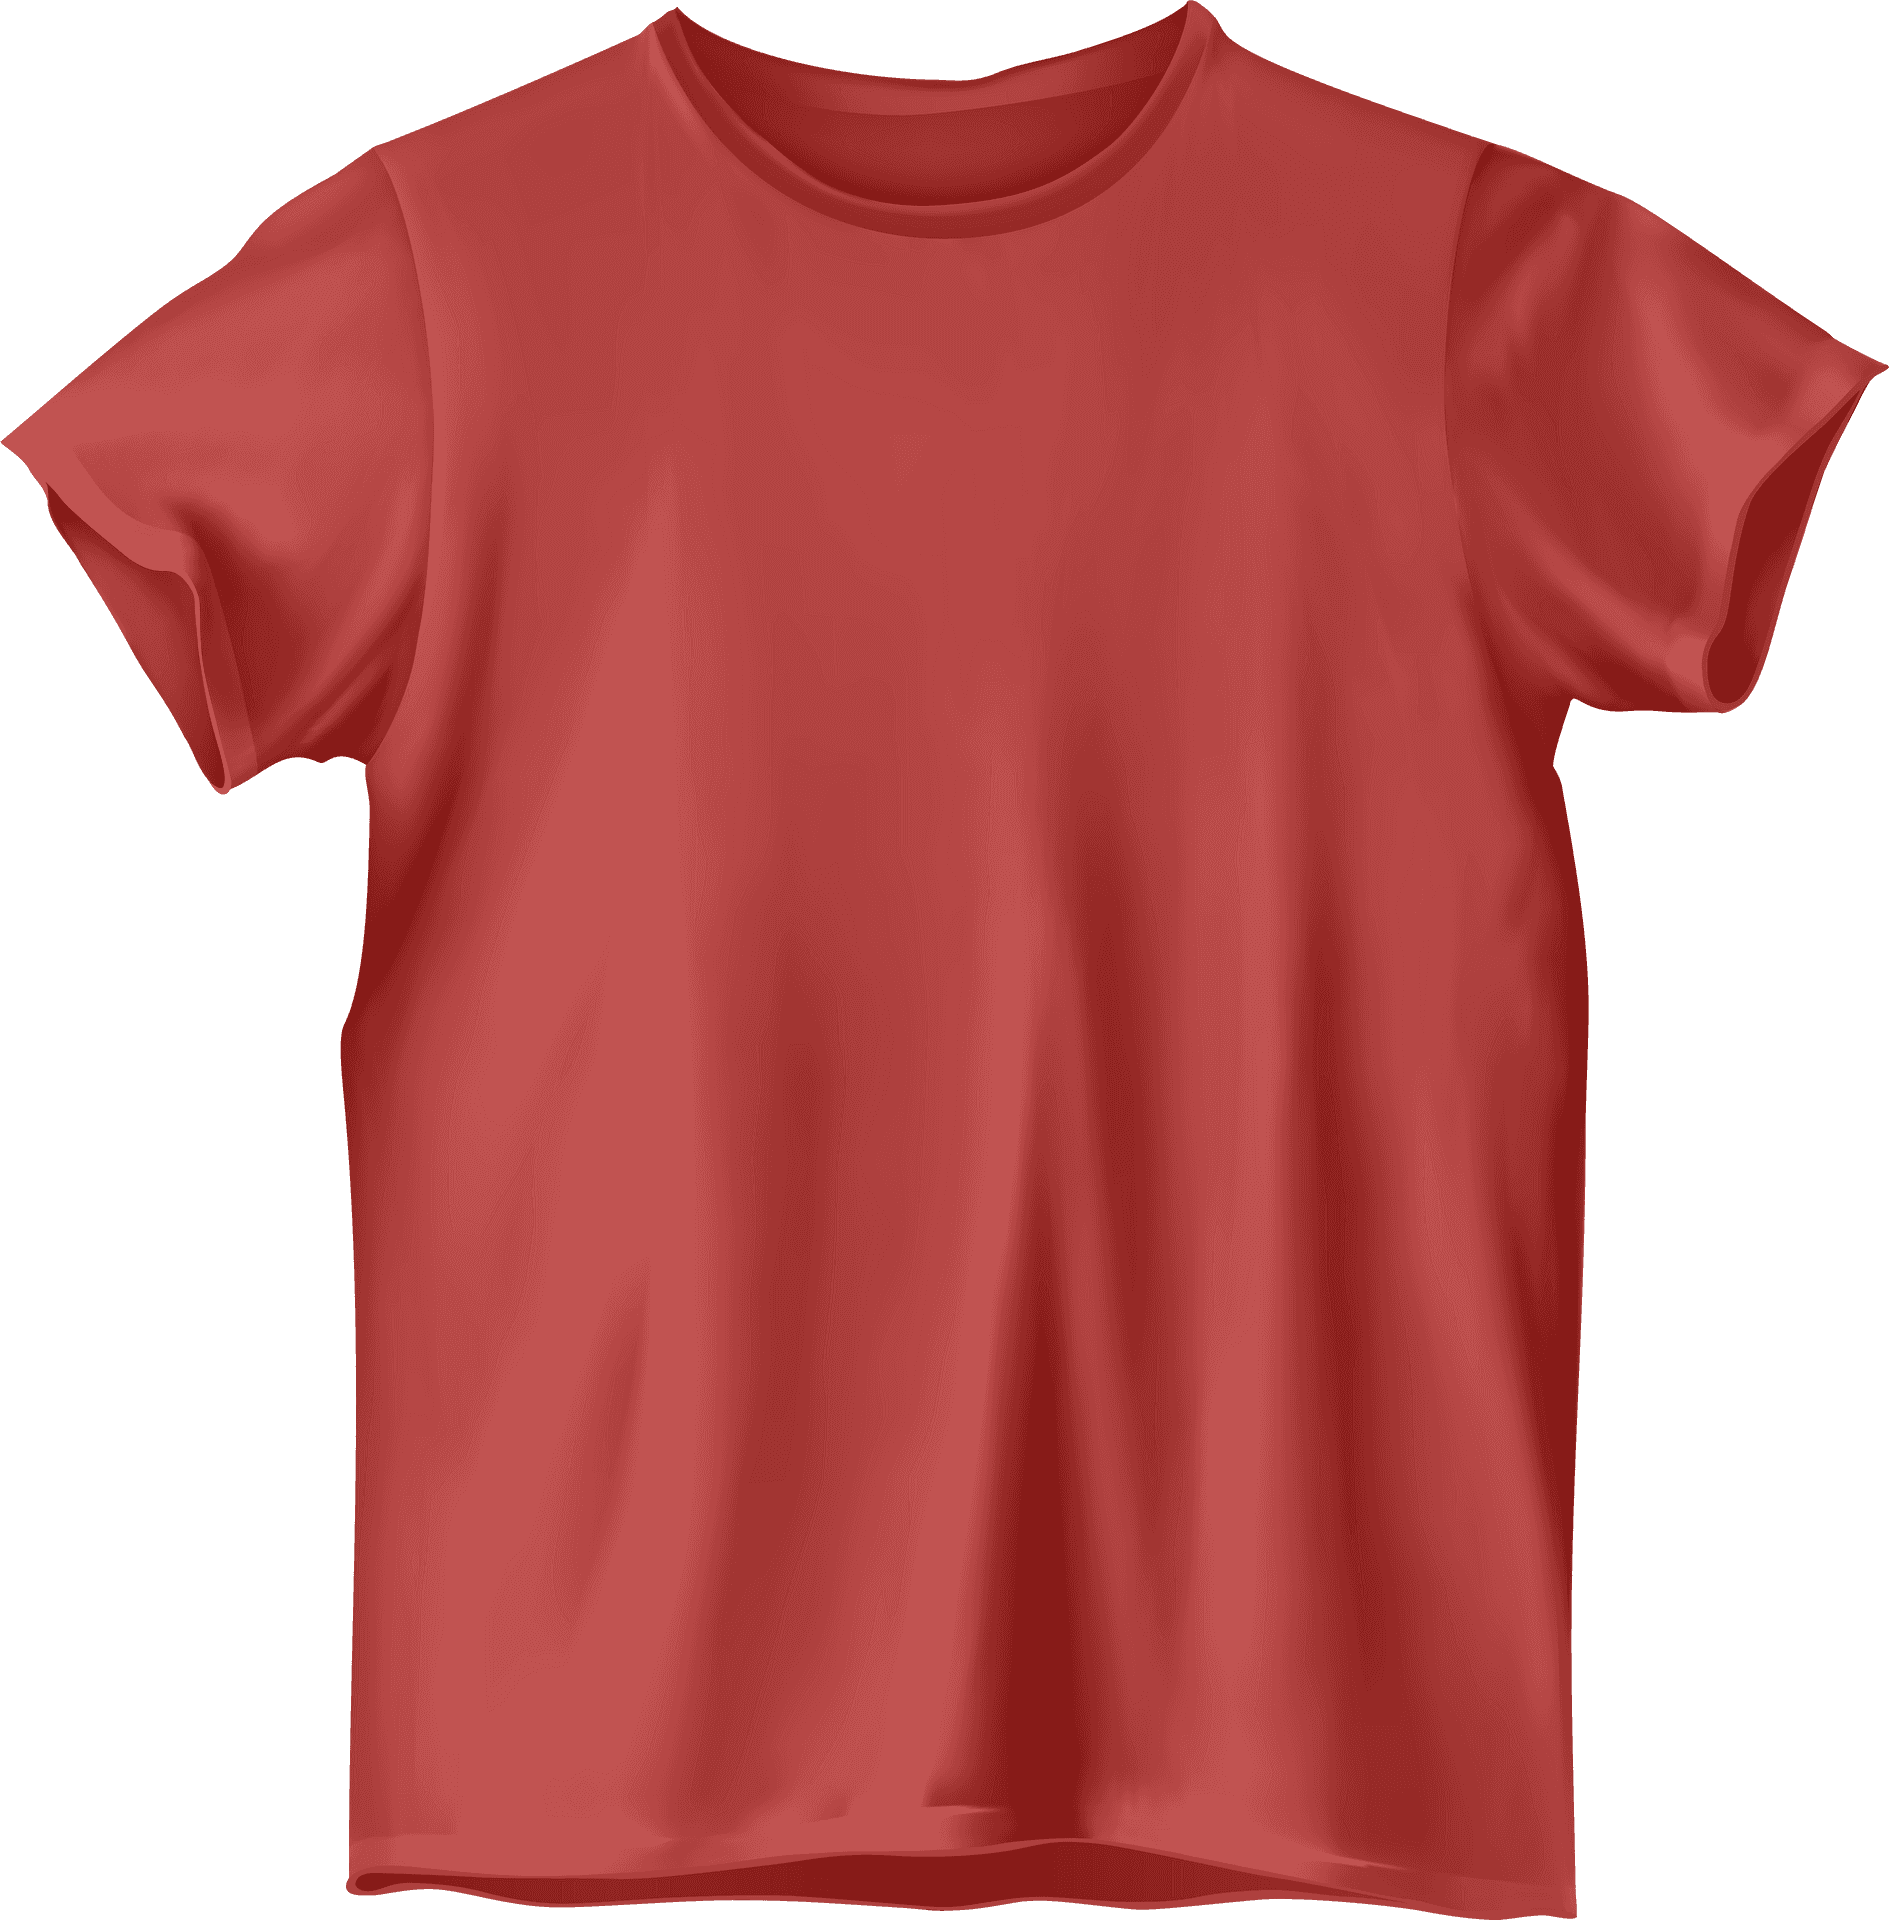 Red Plain T Shirt Mockup PNG